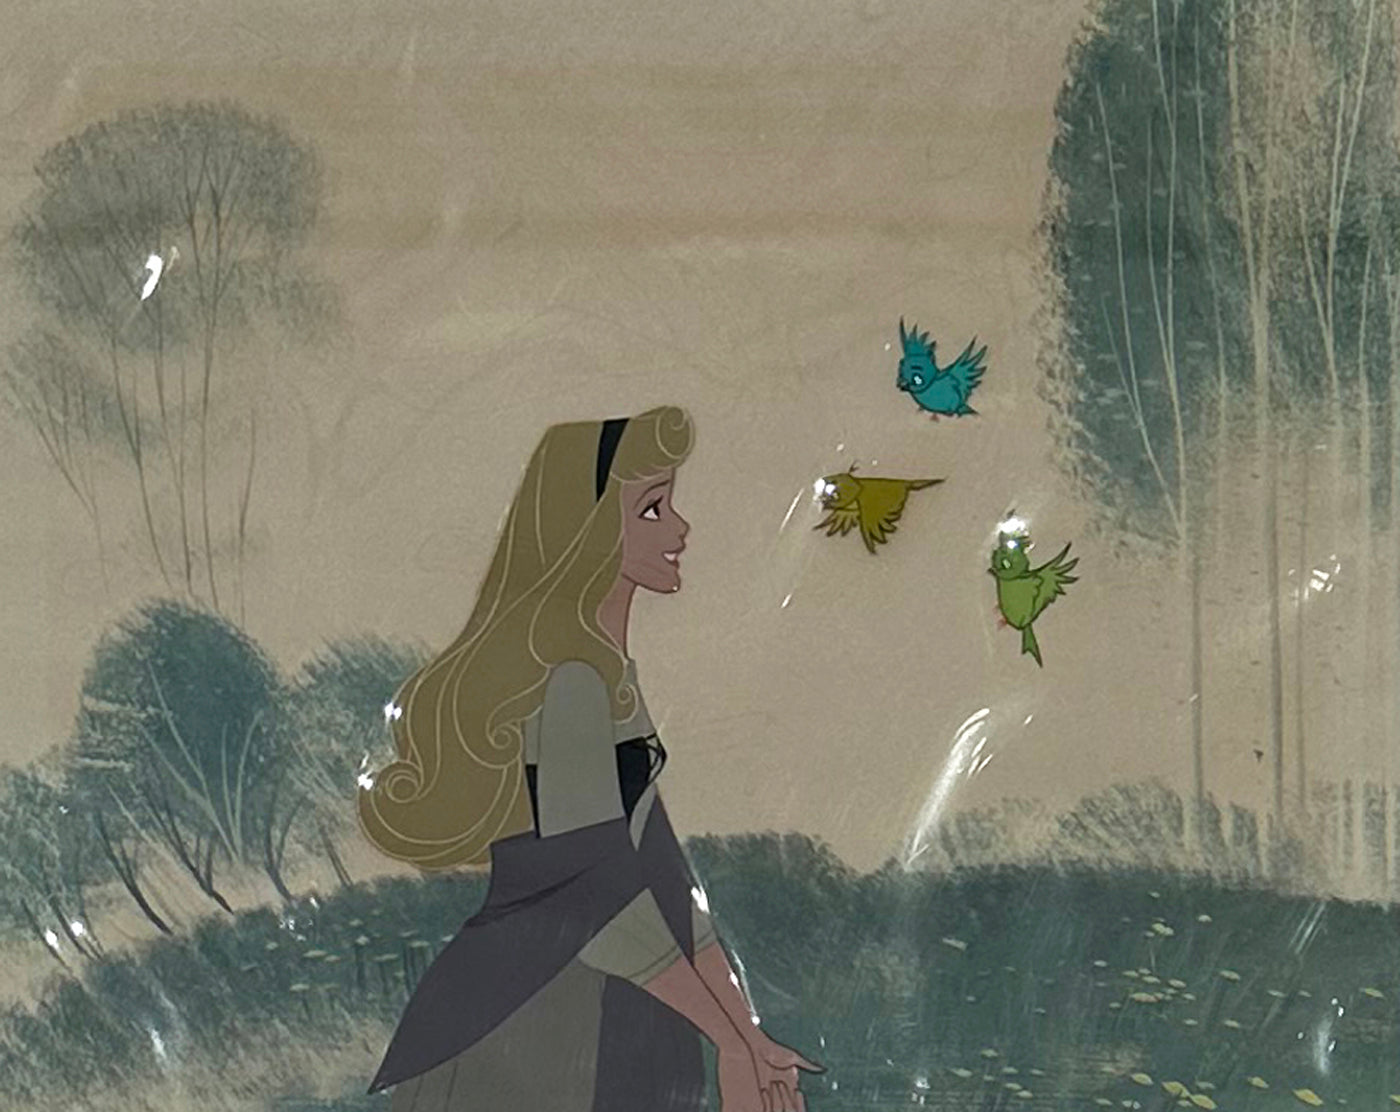 Original Walt Disney Production Cel from Sleeping Beauty featuring Briar Rose